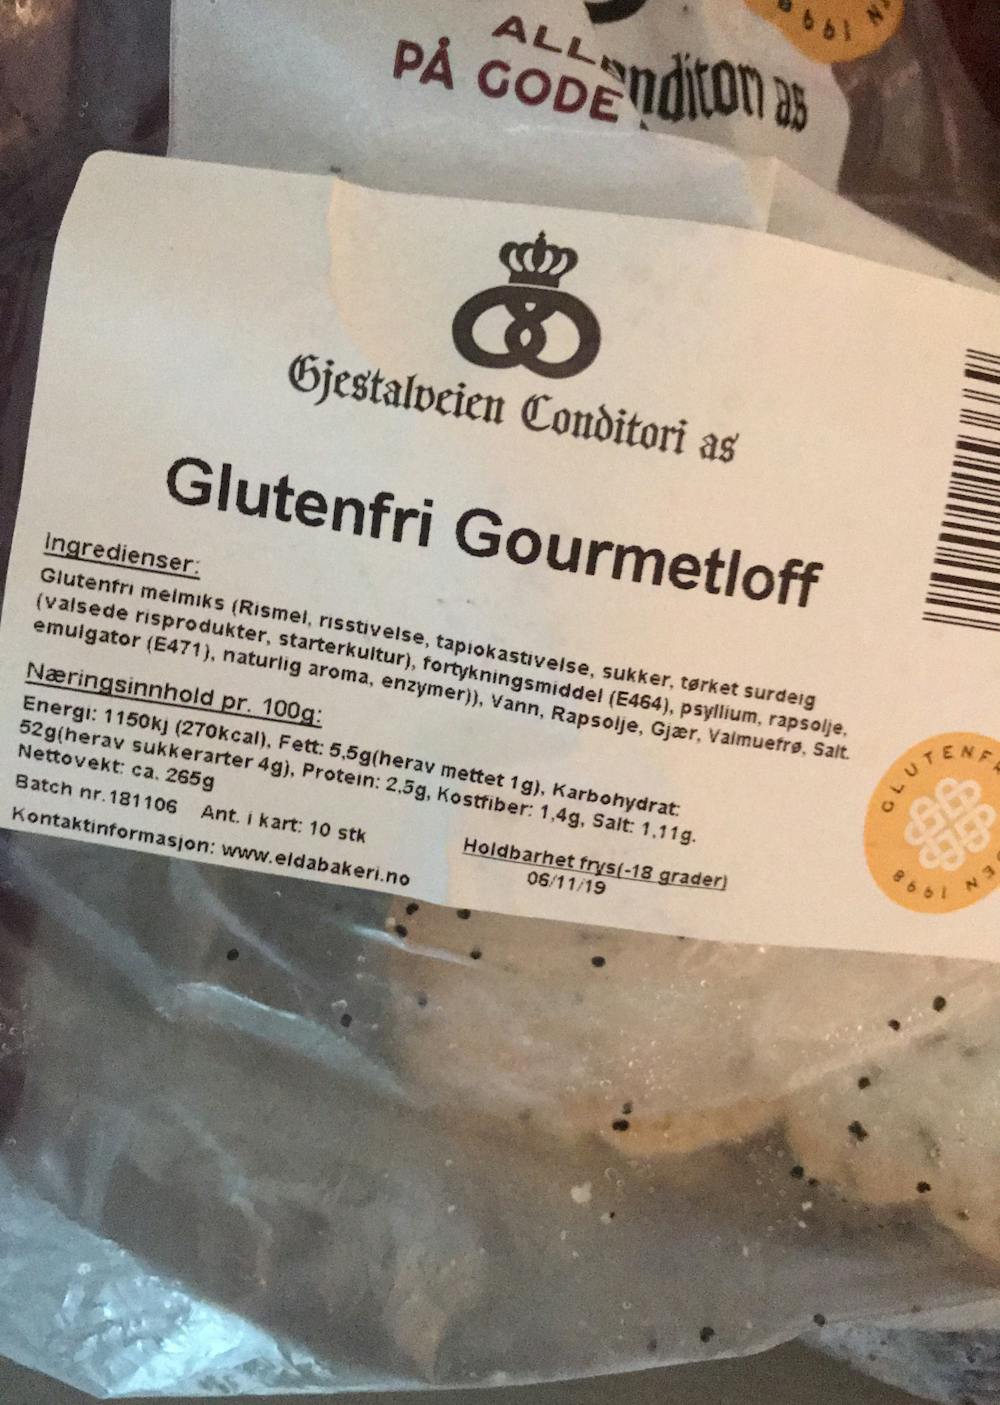 Ingredienslisten til Glutenfri gourmetloff, Gjestalveien conditori AS